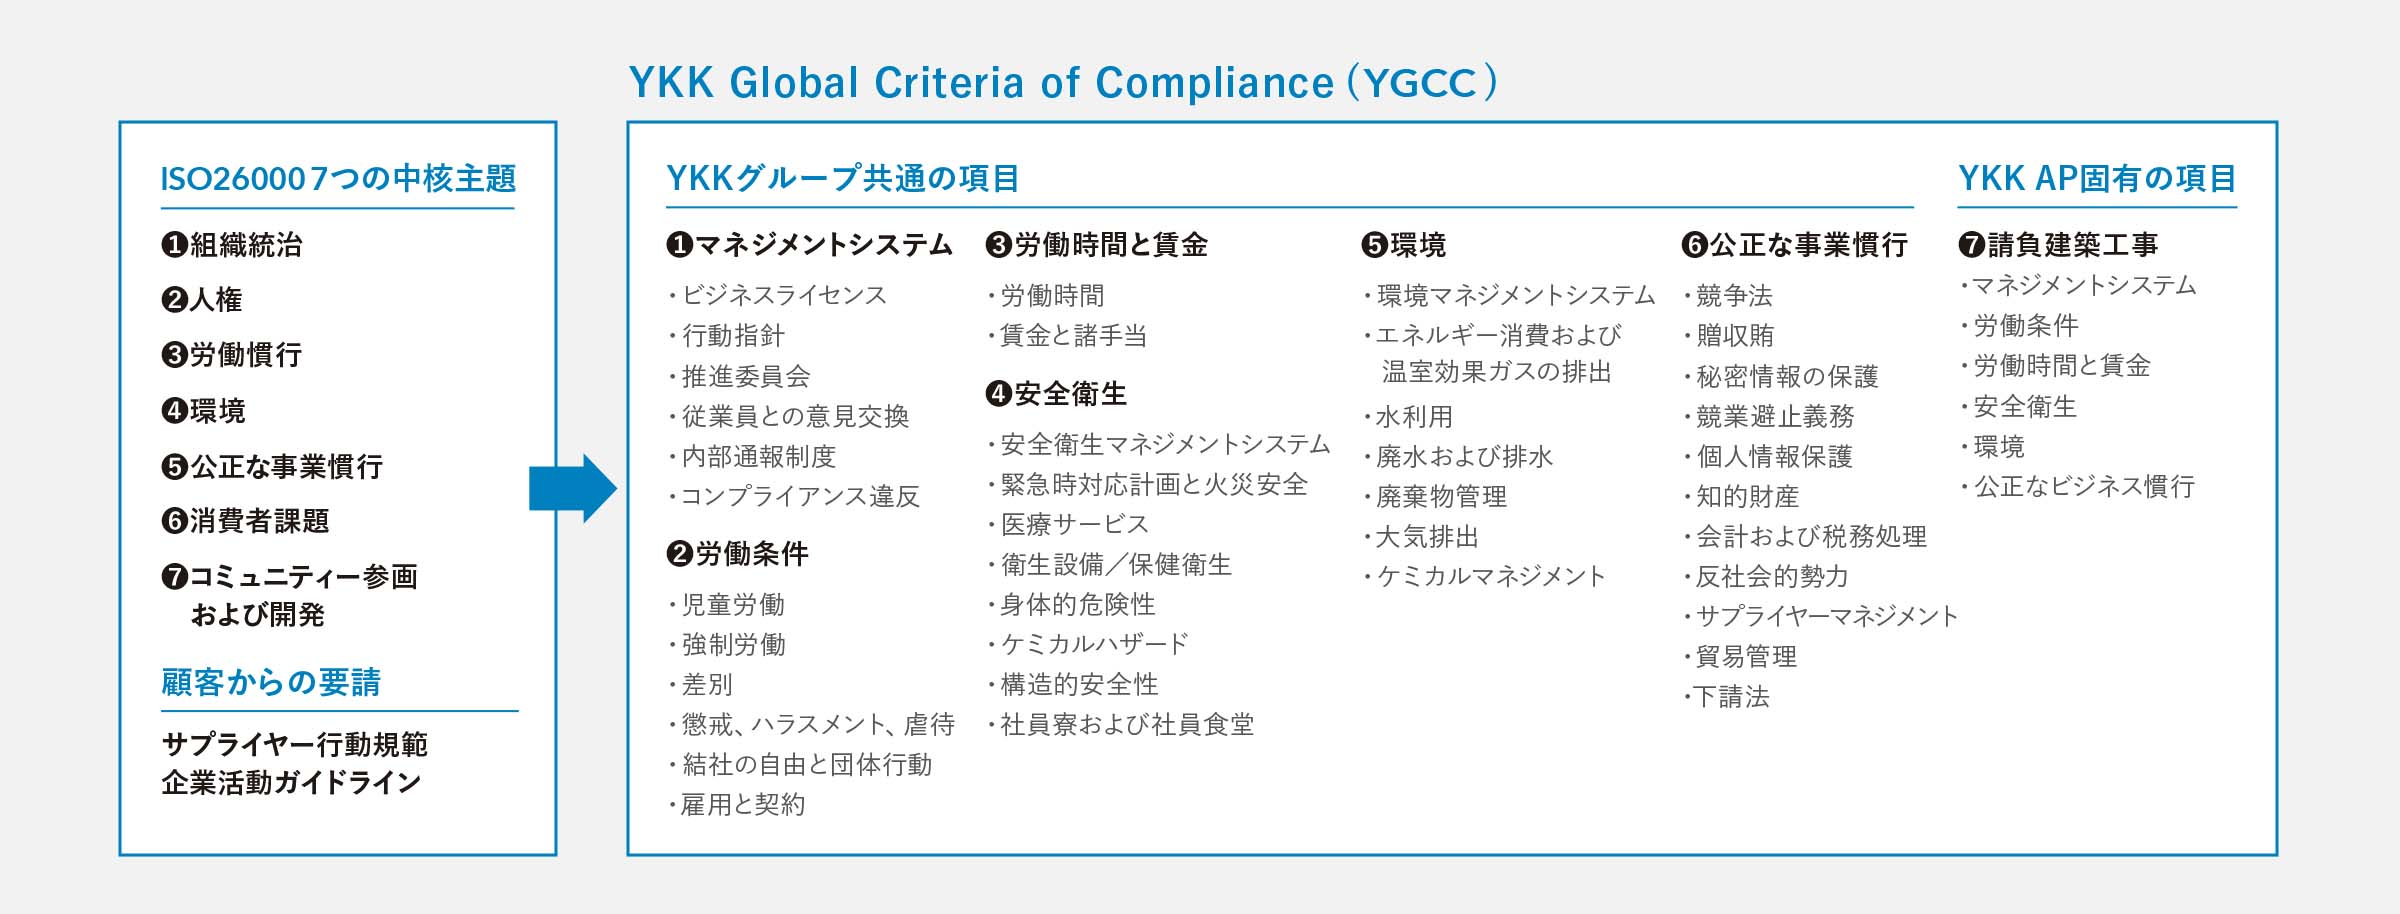 YKK Global Criteria of Compliance 図